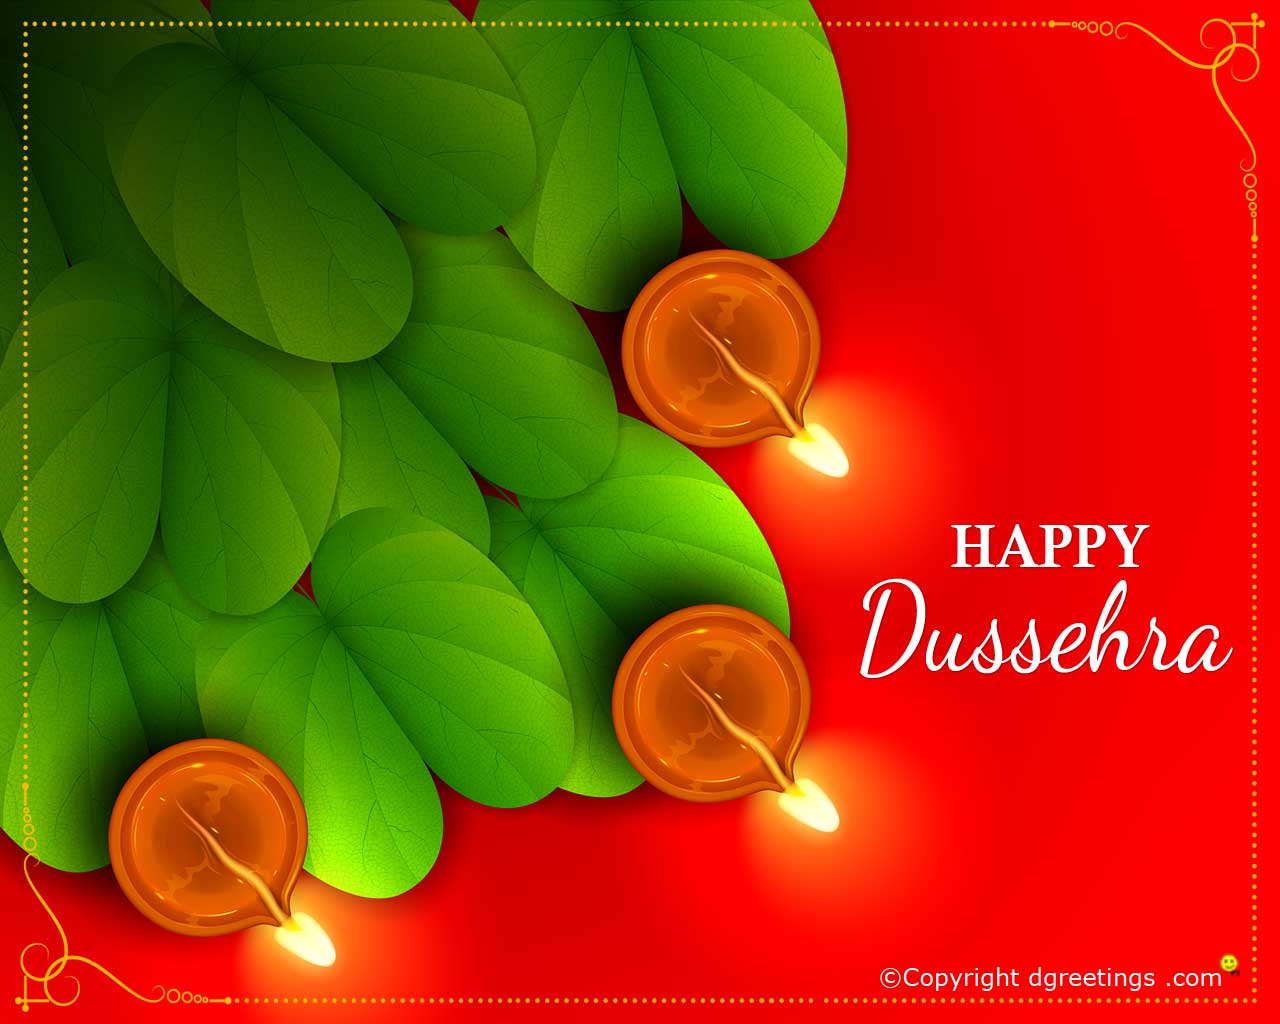 Dussehra Wishes In Marathi - 1280x1024 Wallpaper 